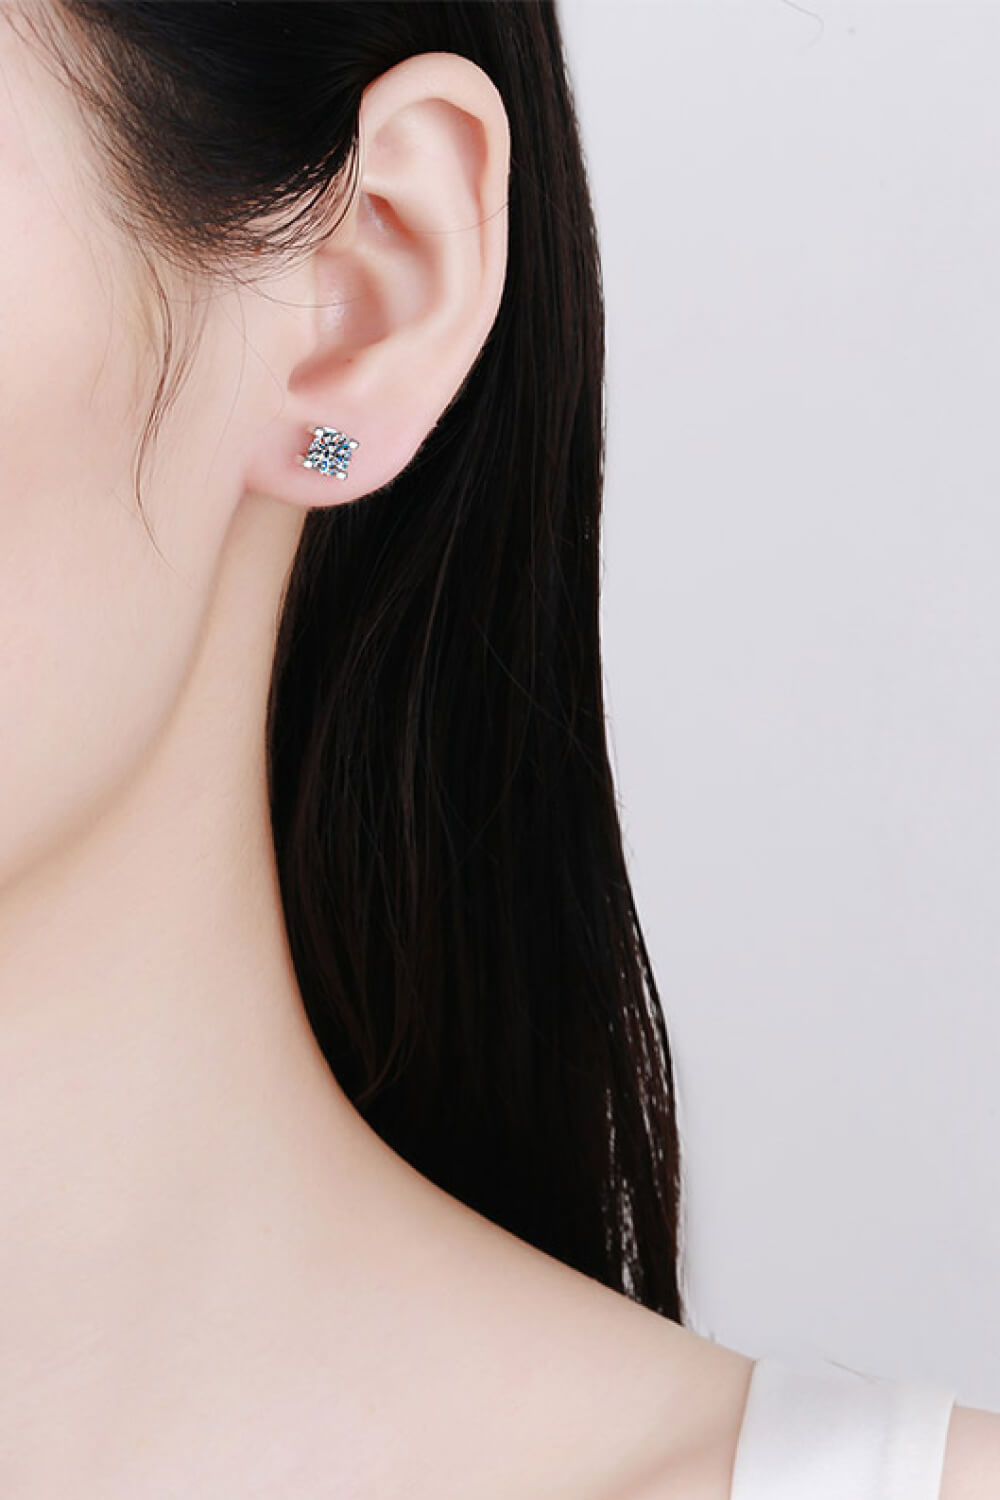 Limitless Love 1 Carat Moissanite Stud Earrings - Tophatter Shopping Deals